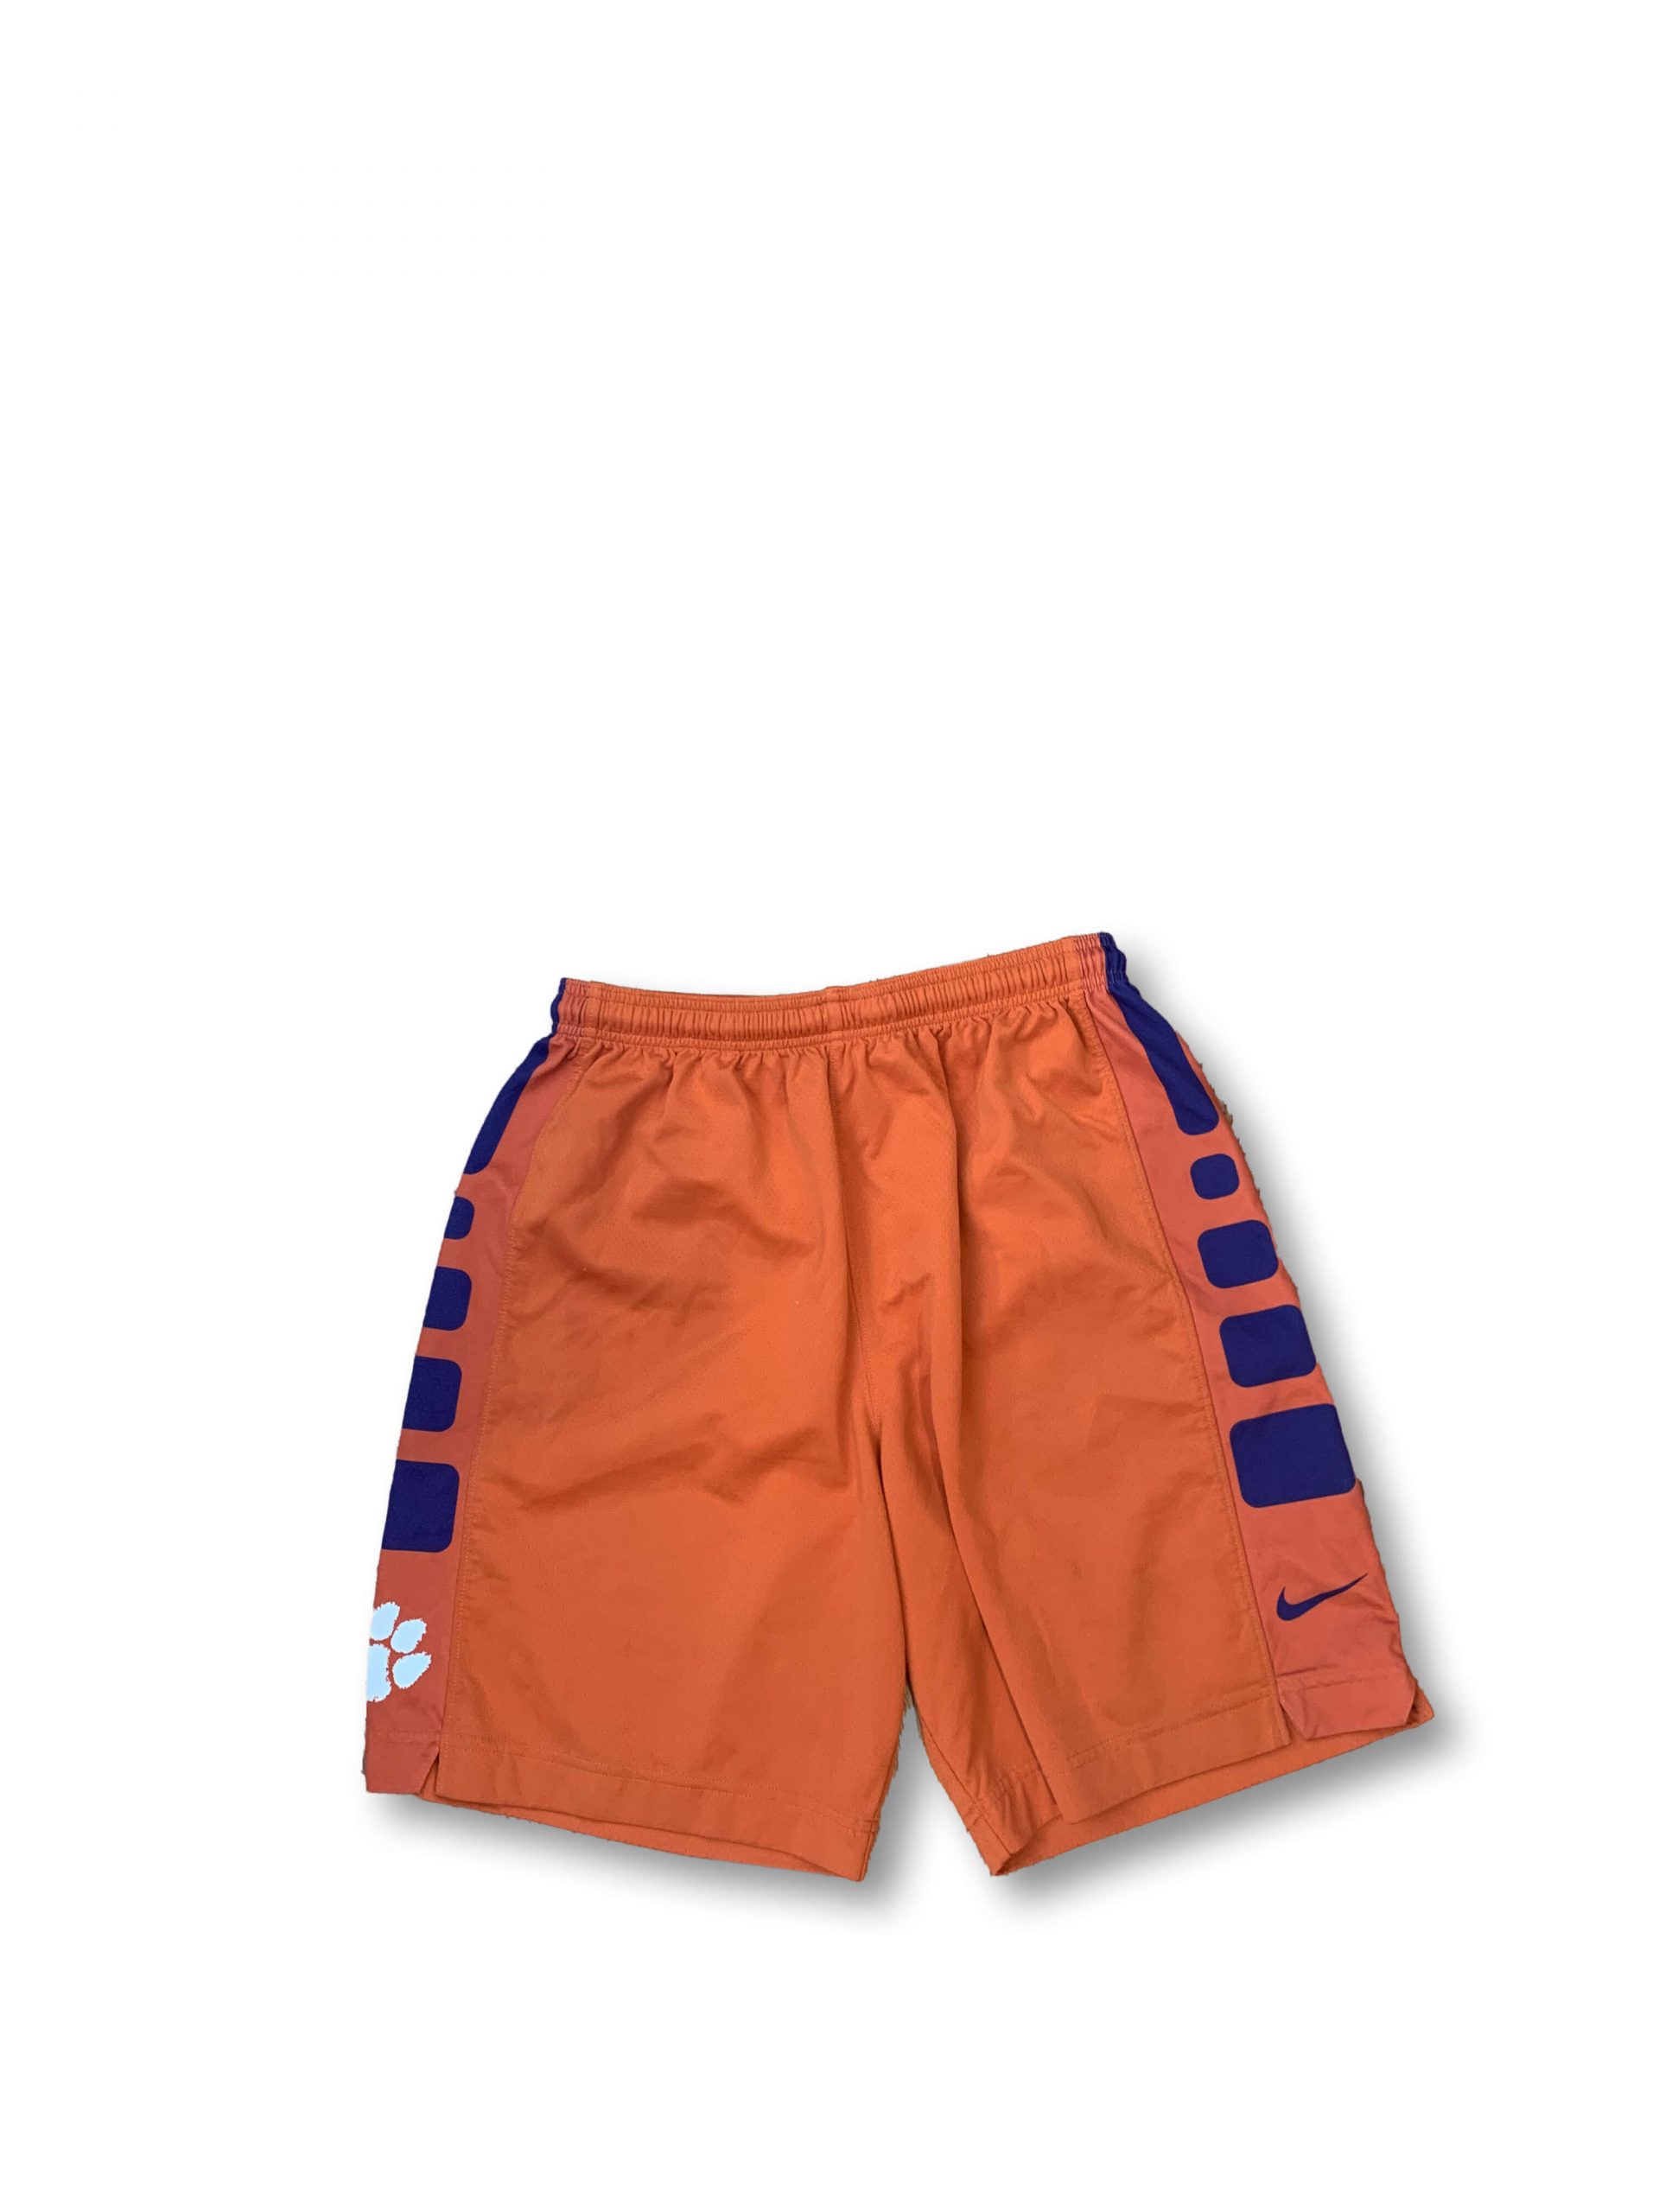 Clemson Basketball Practice Shorts : NARP Clothing